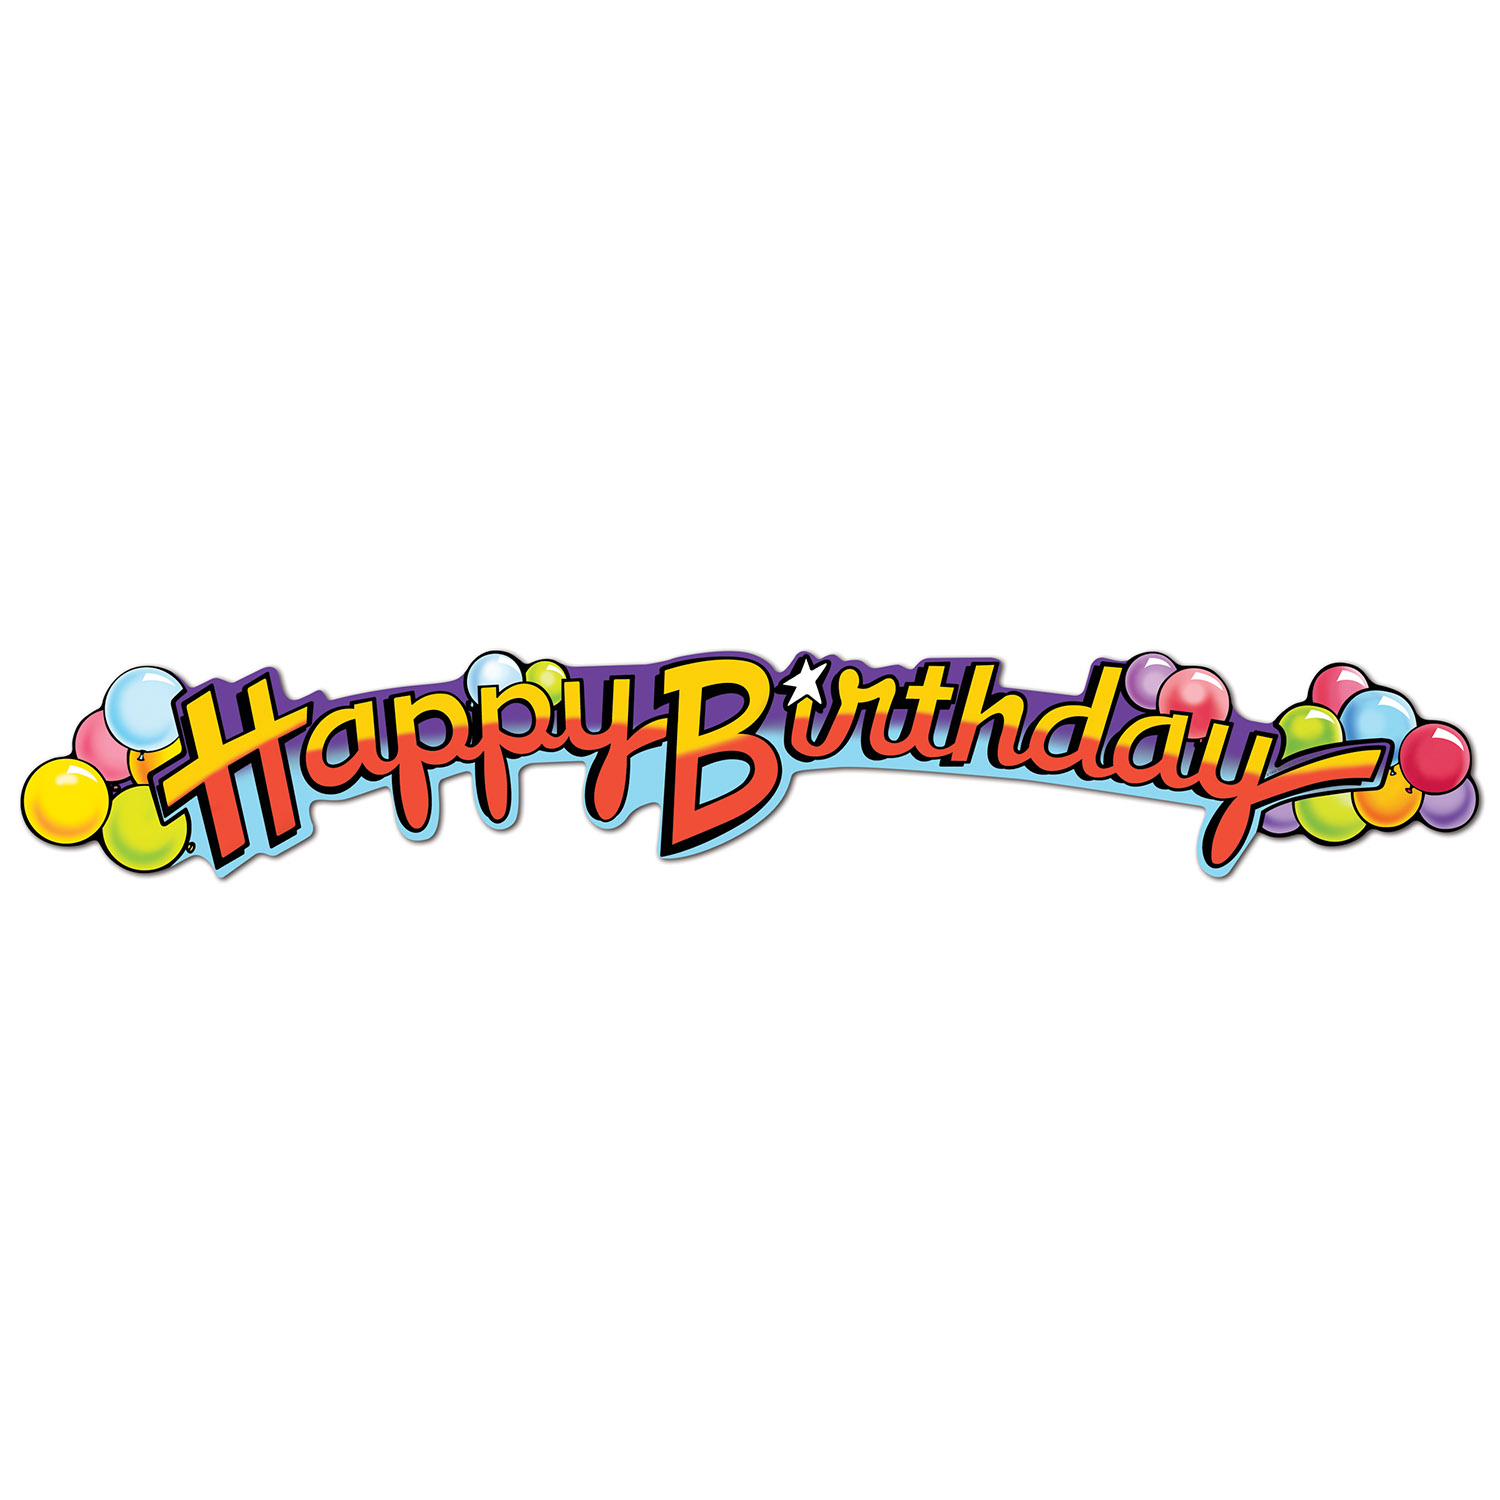 Happy Birthday Streamer - Webhats.com